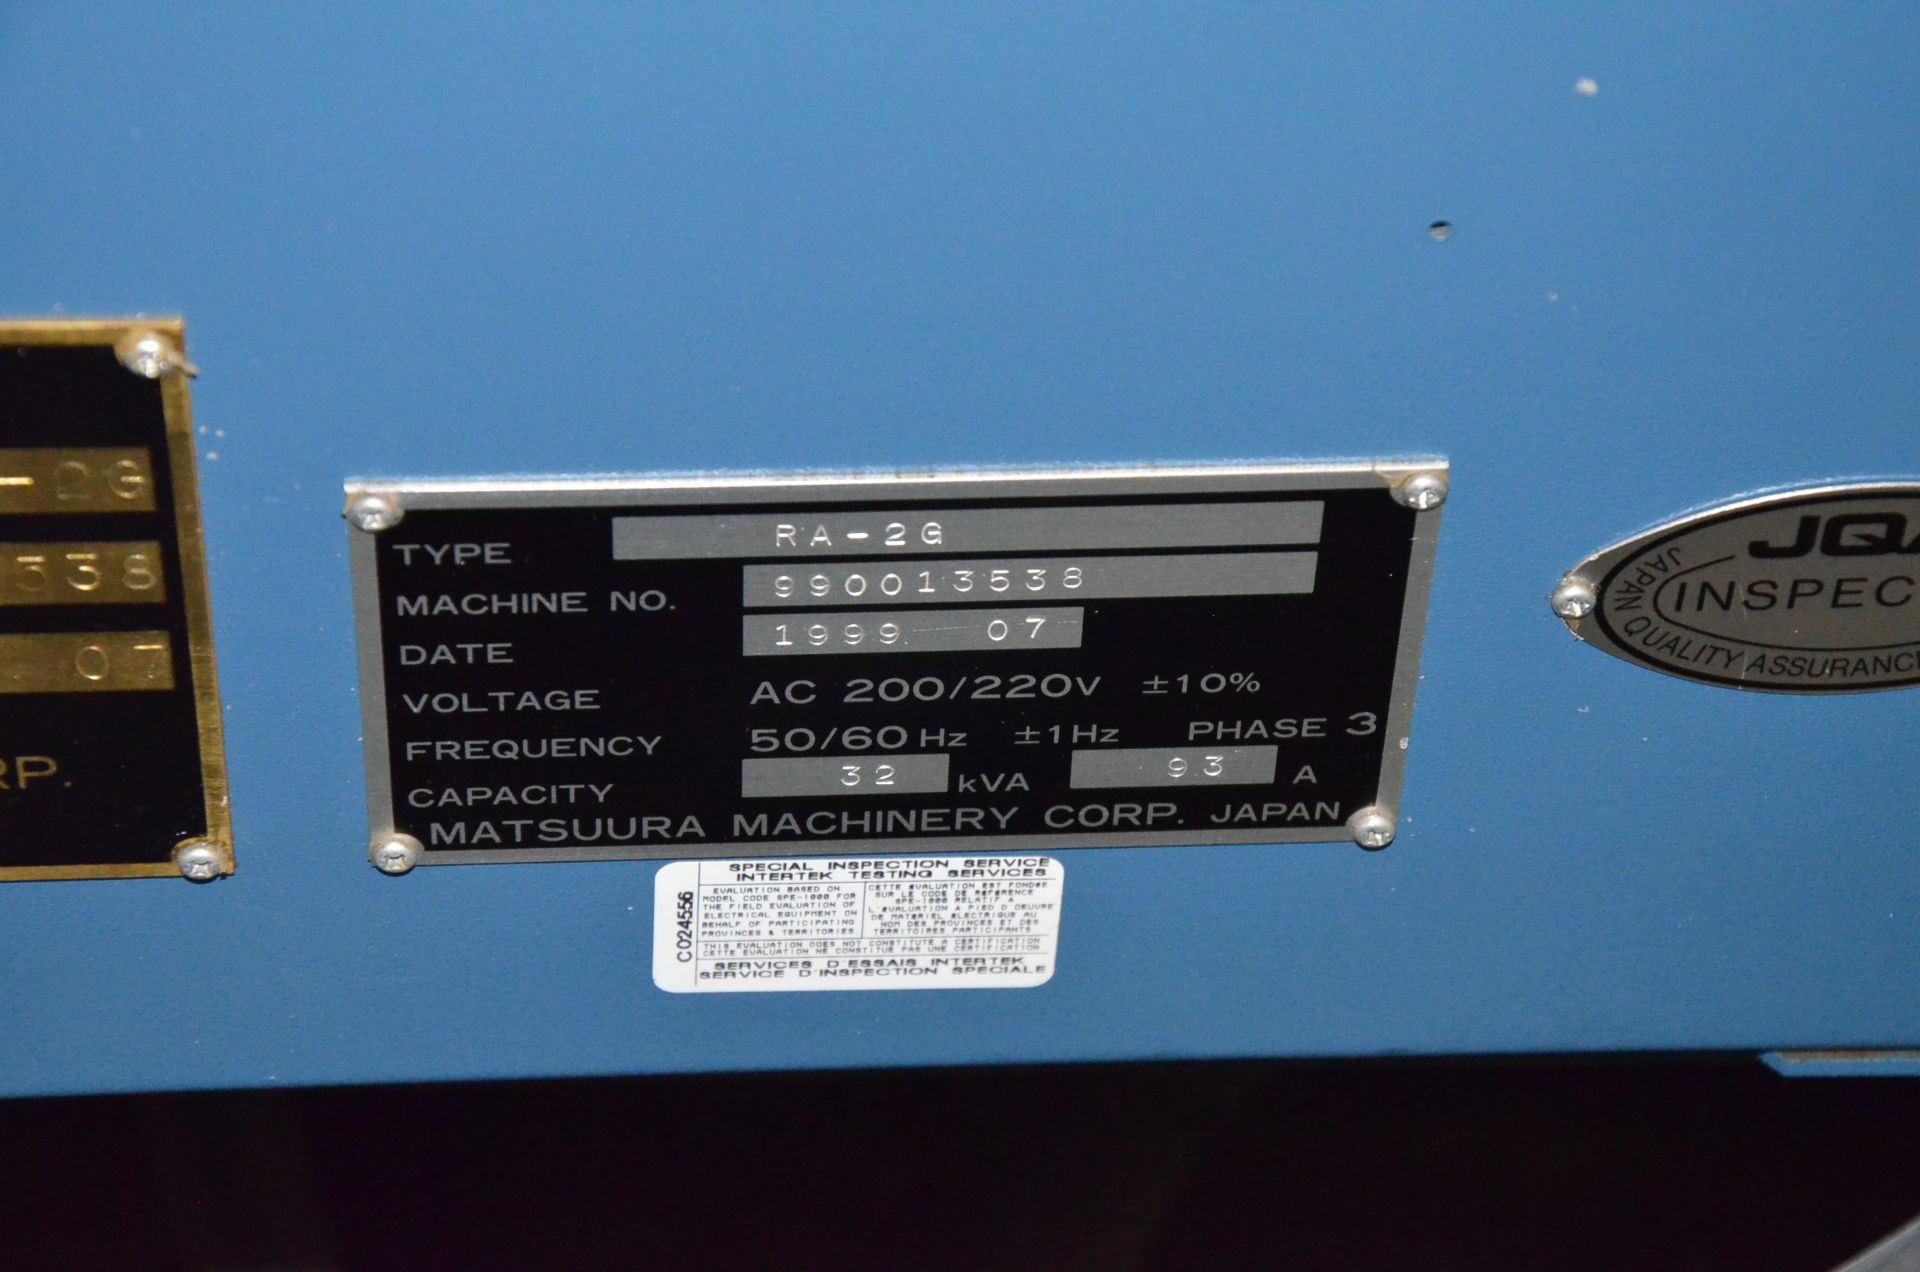 MATSUURA RA-2G CNC TWIN PALLET CNC VERTICAL MACHINING CENTER WITH MATSUURA YASNAC J300 CNC - Image 12 of 19